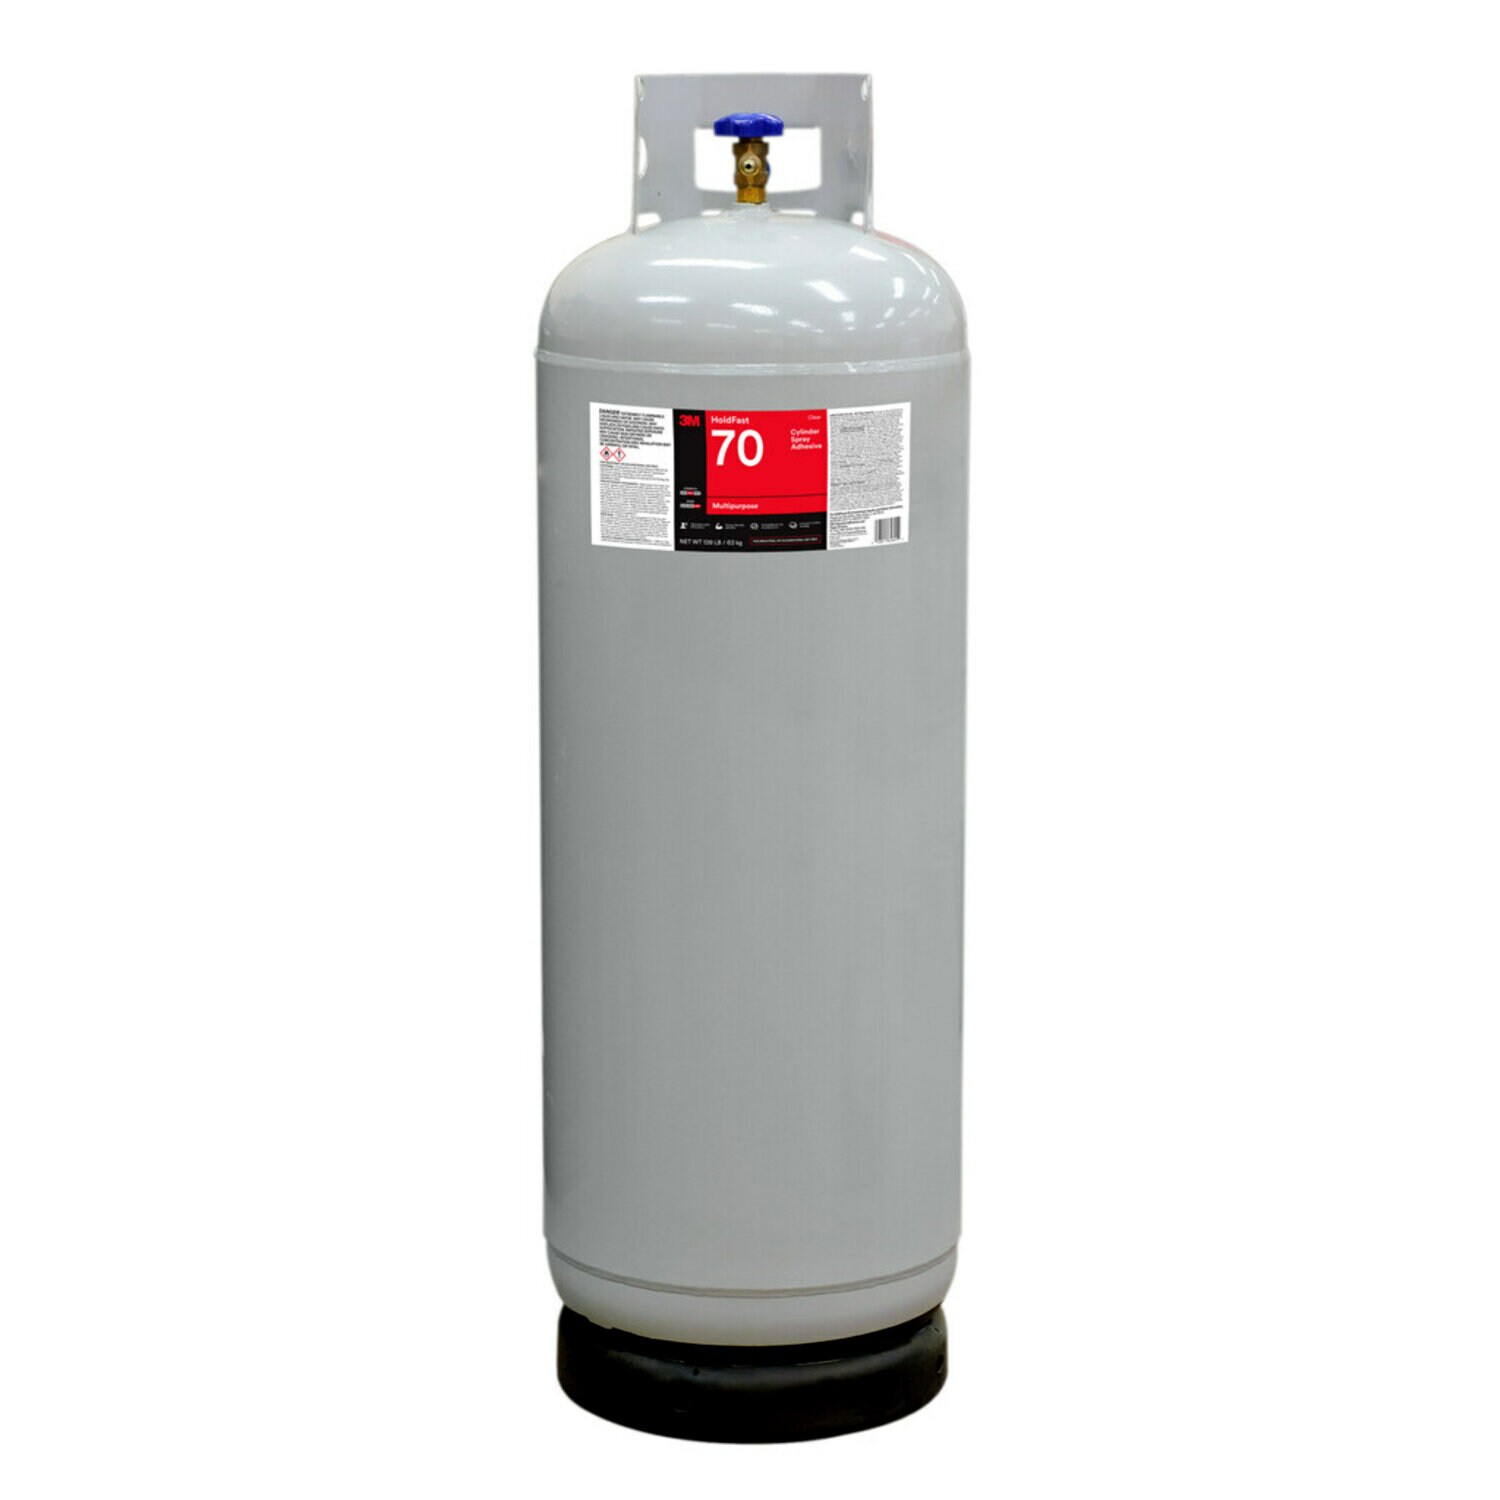 7100138618 - 3M HoldFast 70 Cylinder Spray Adhesive, Clear, Intermediate Cylinder
(Net Wt 139 lb)